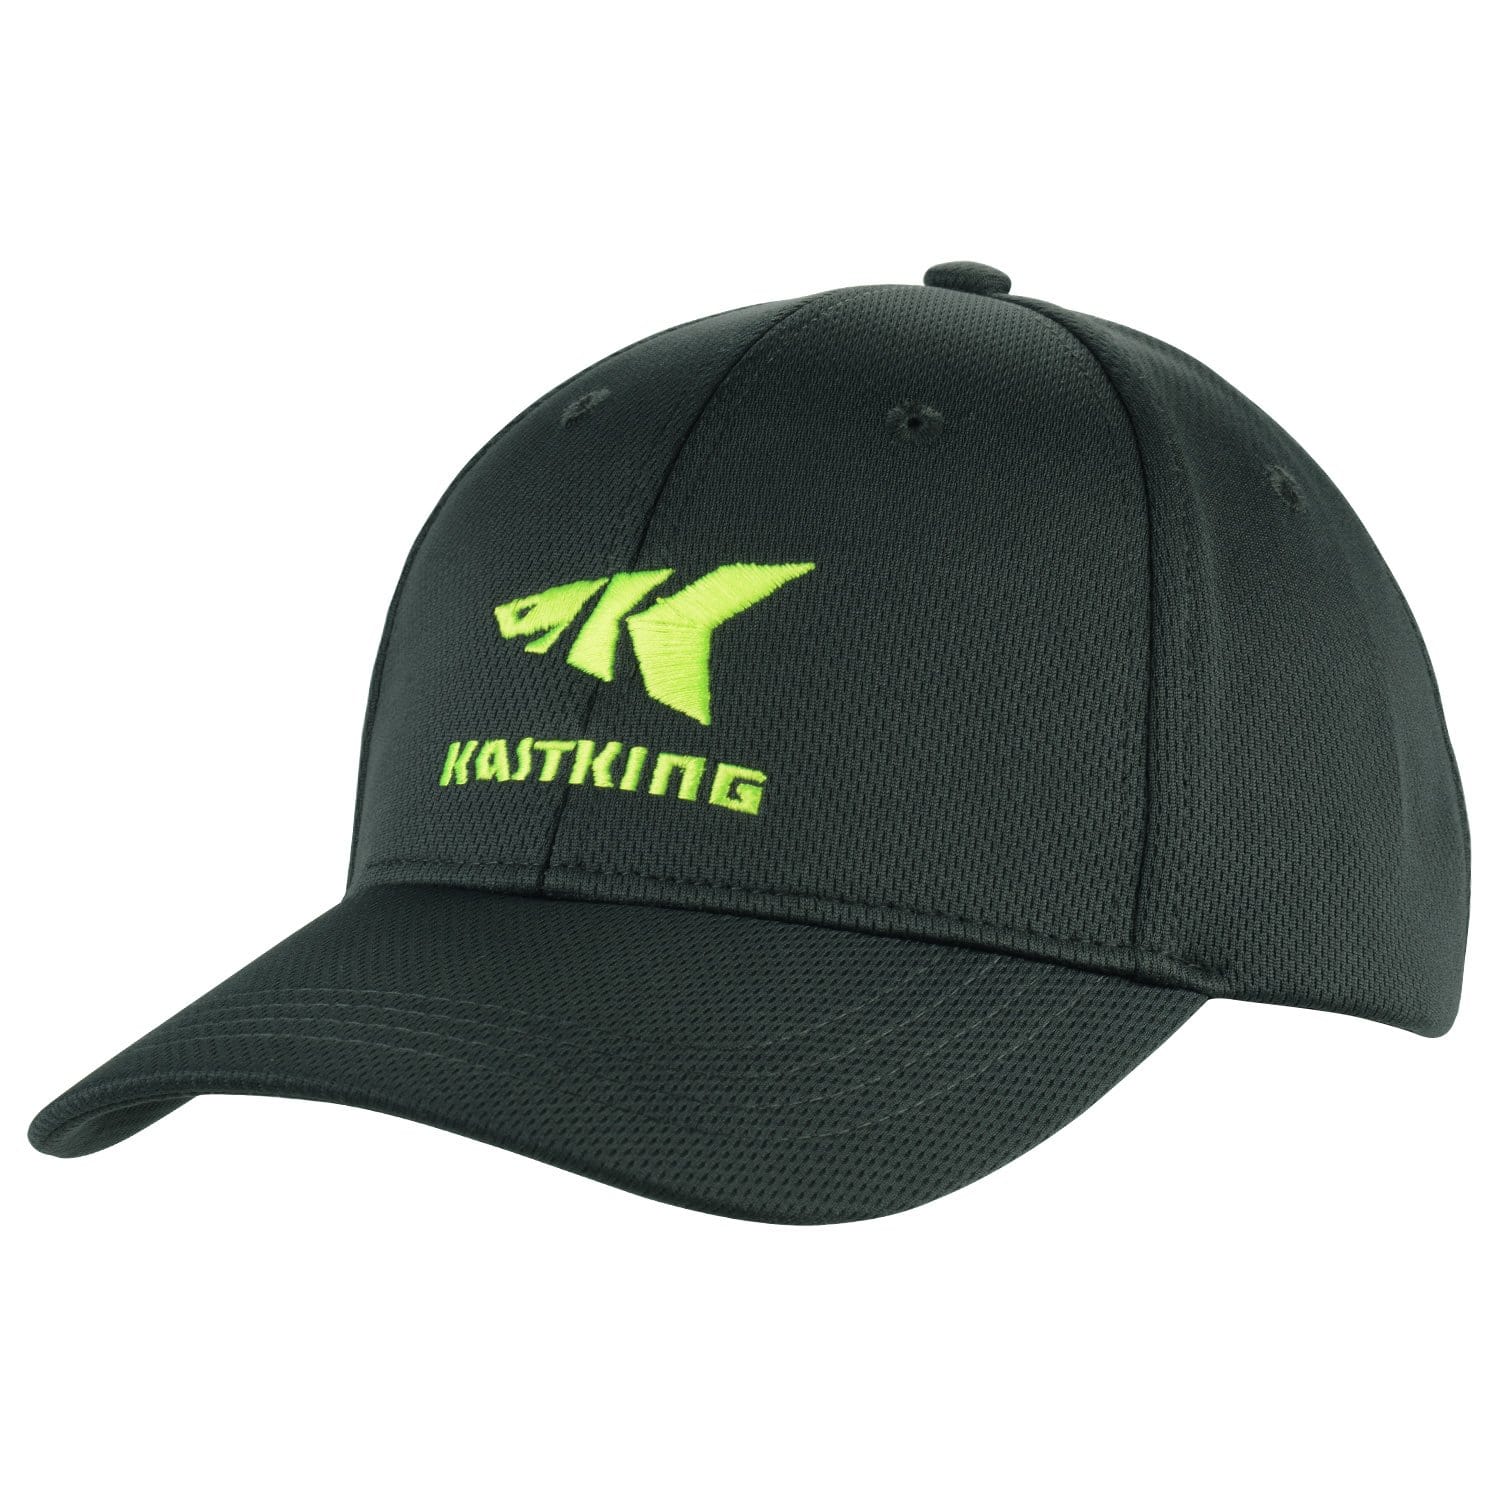 KastKing Official Caps - Adjustable / Gray